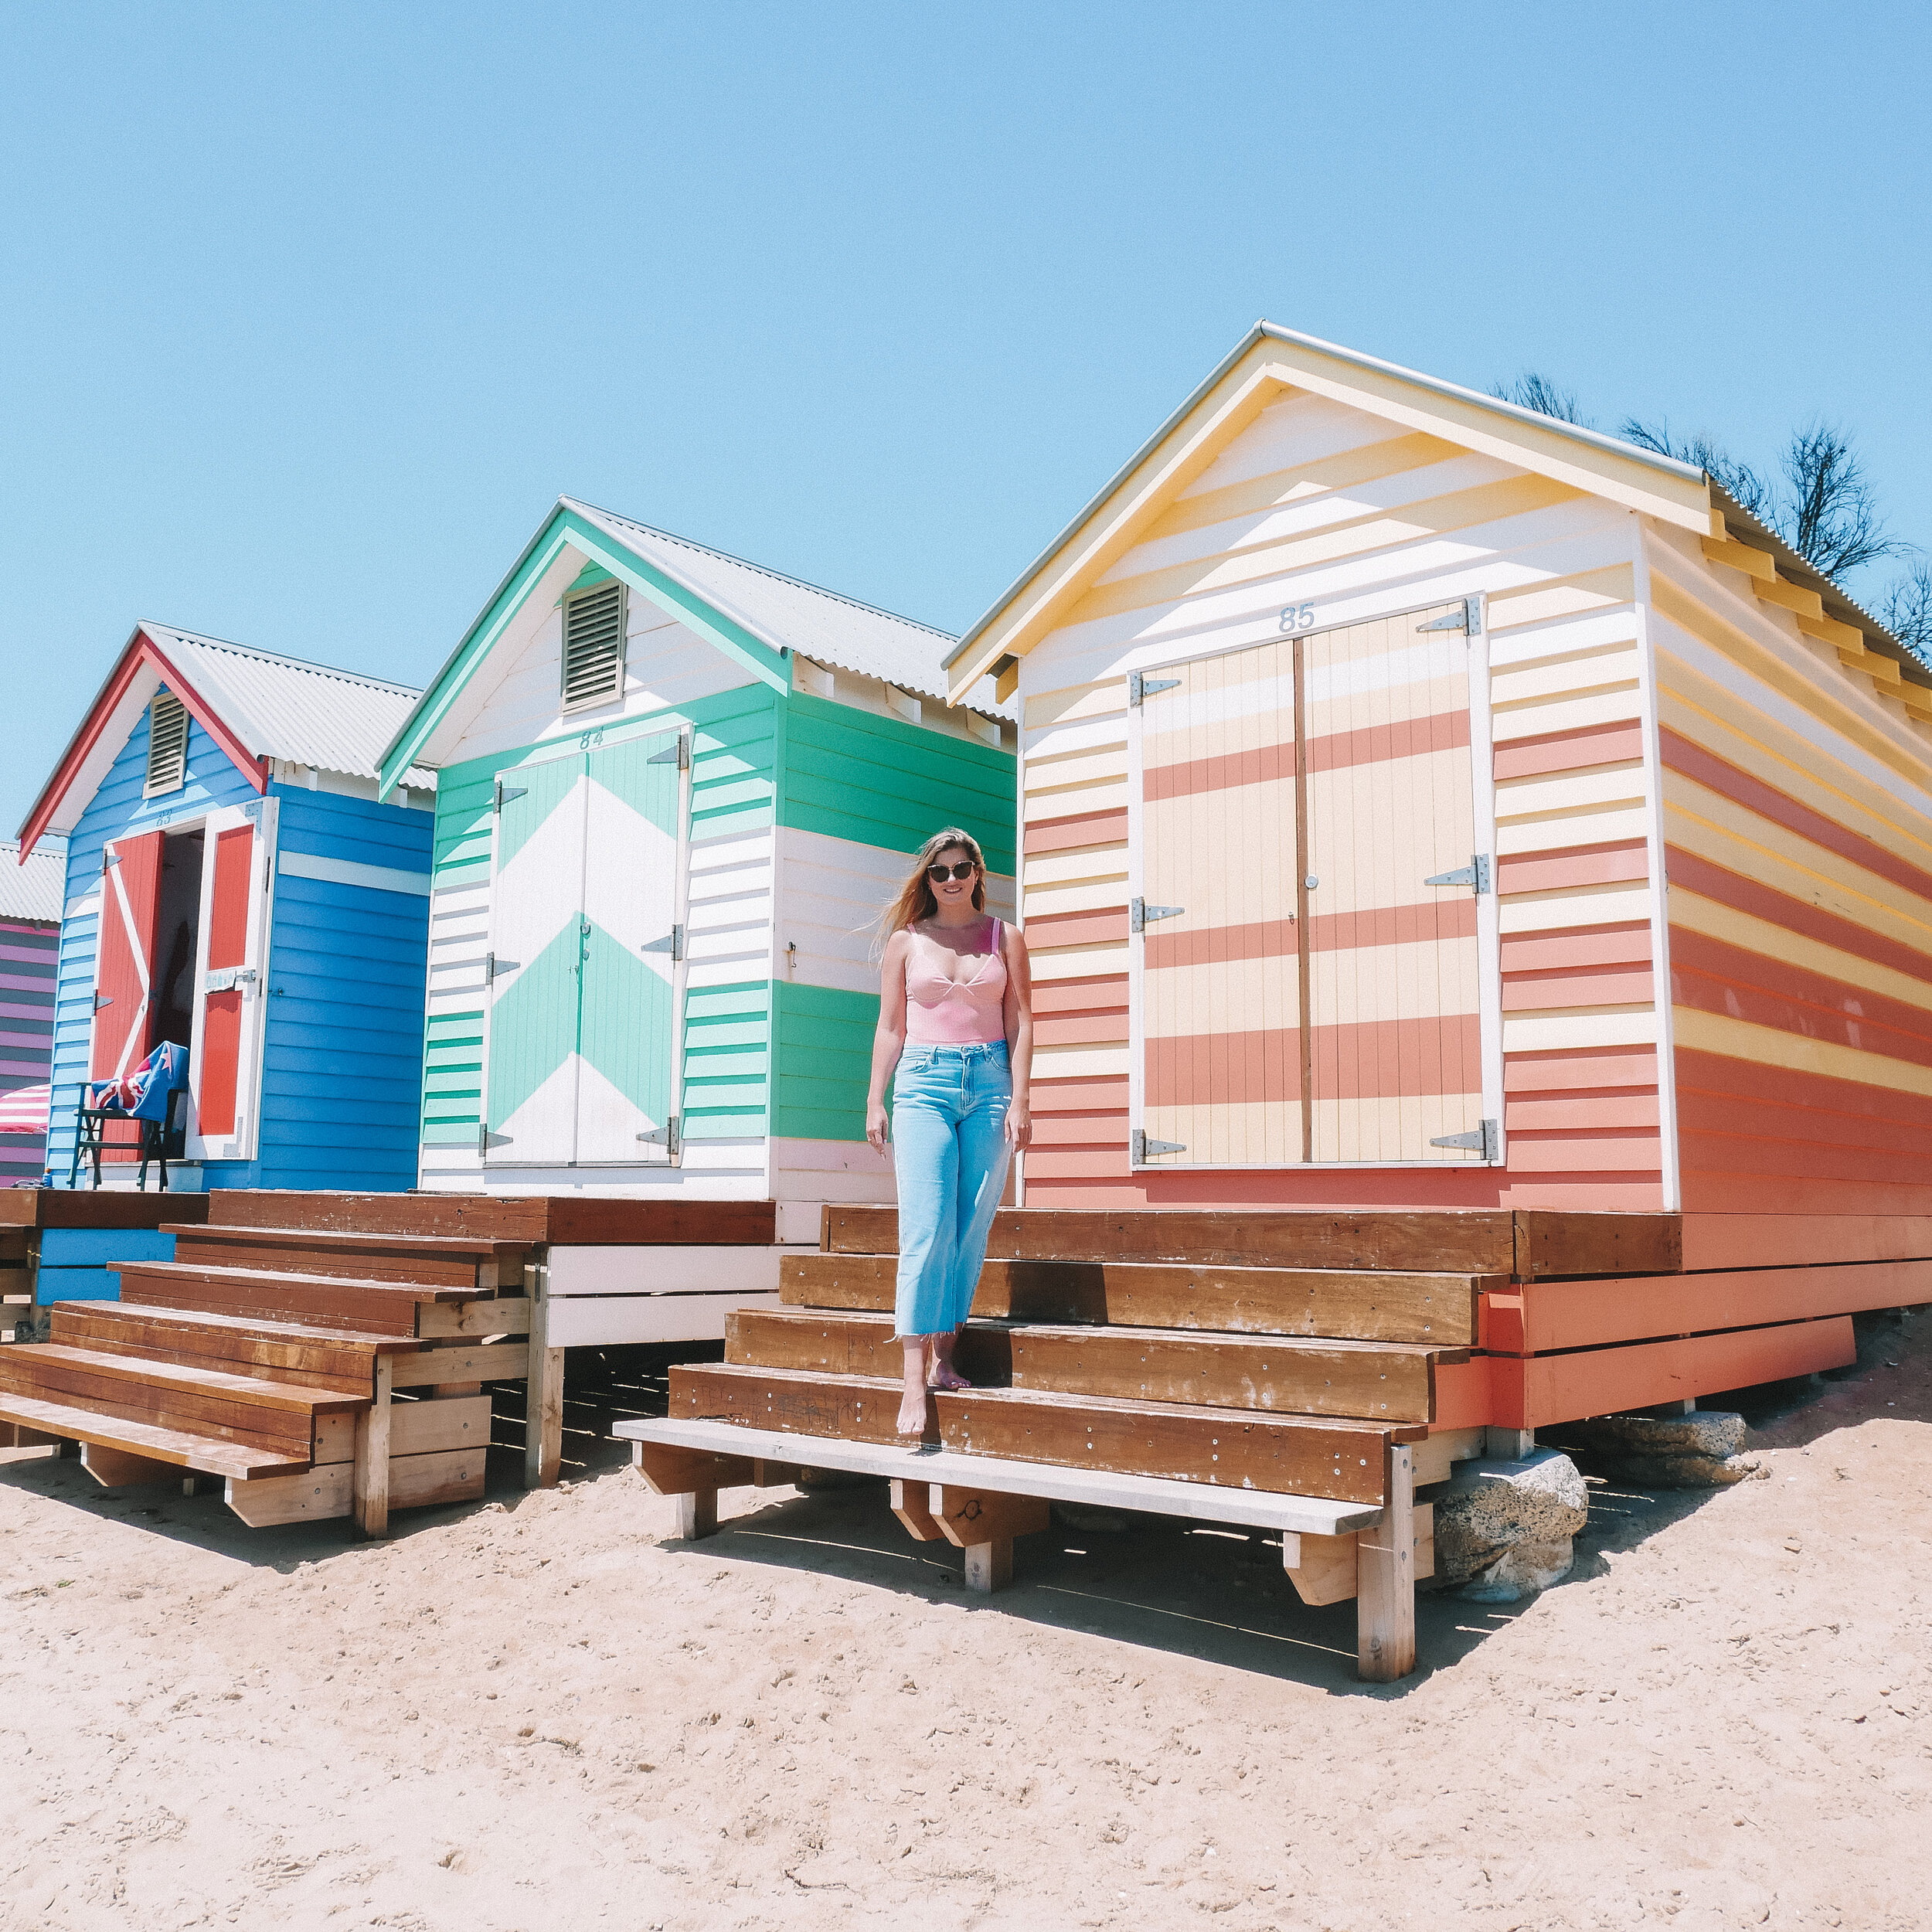 Posing in front of the colourful houses - Brighton Bathing Boxes - Brighton - Melbourne - Victoria - Australia